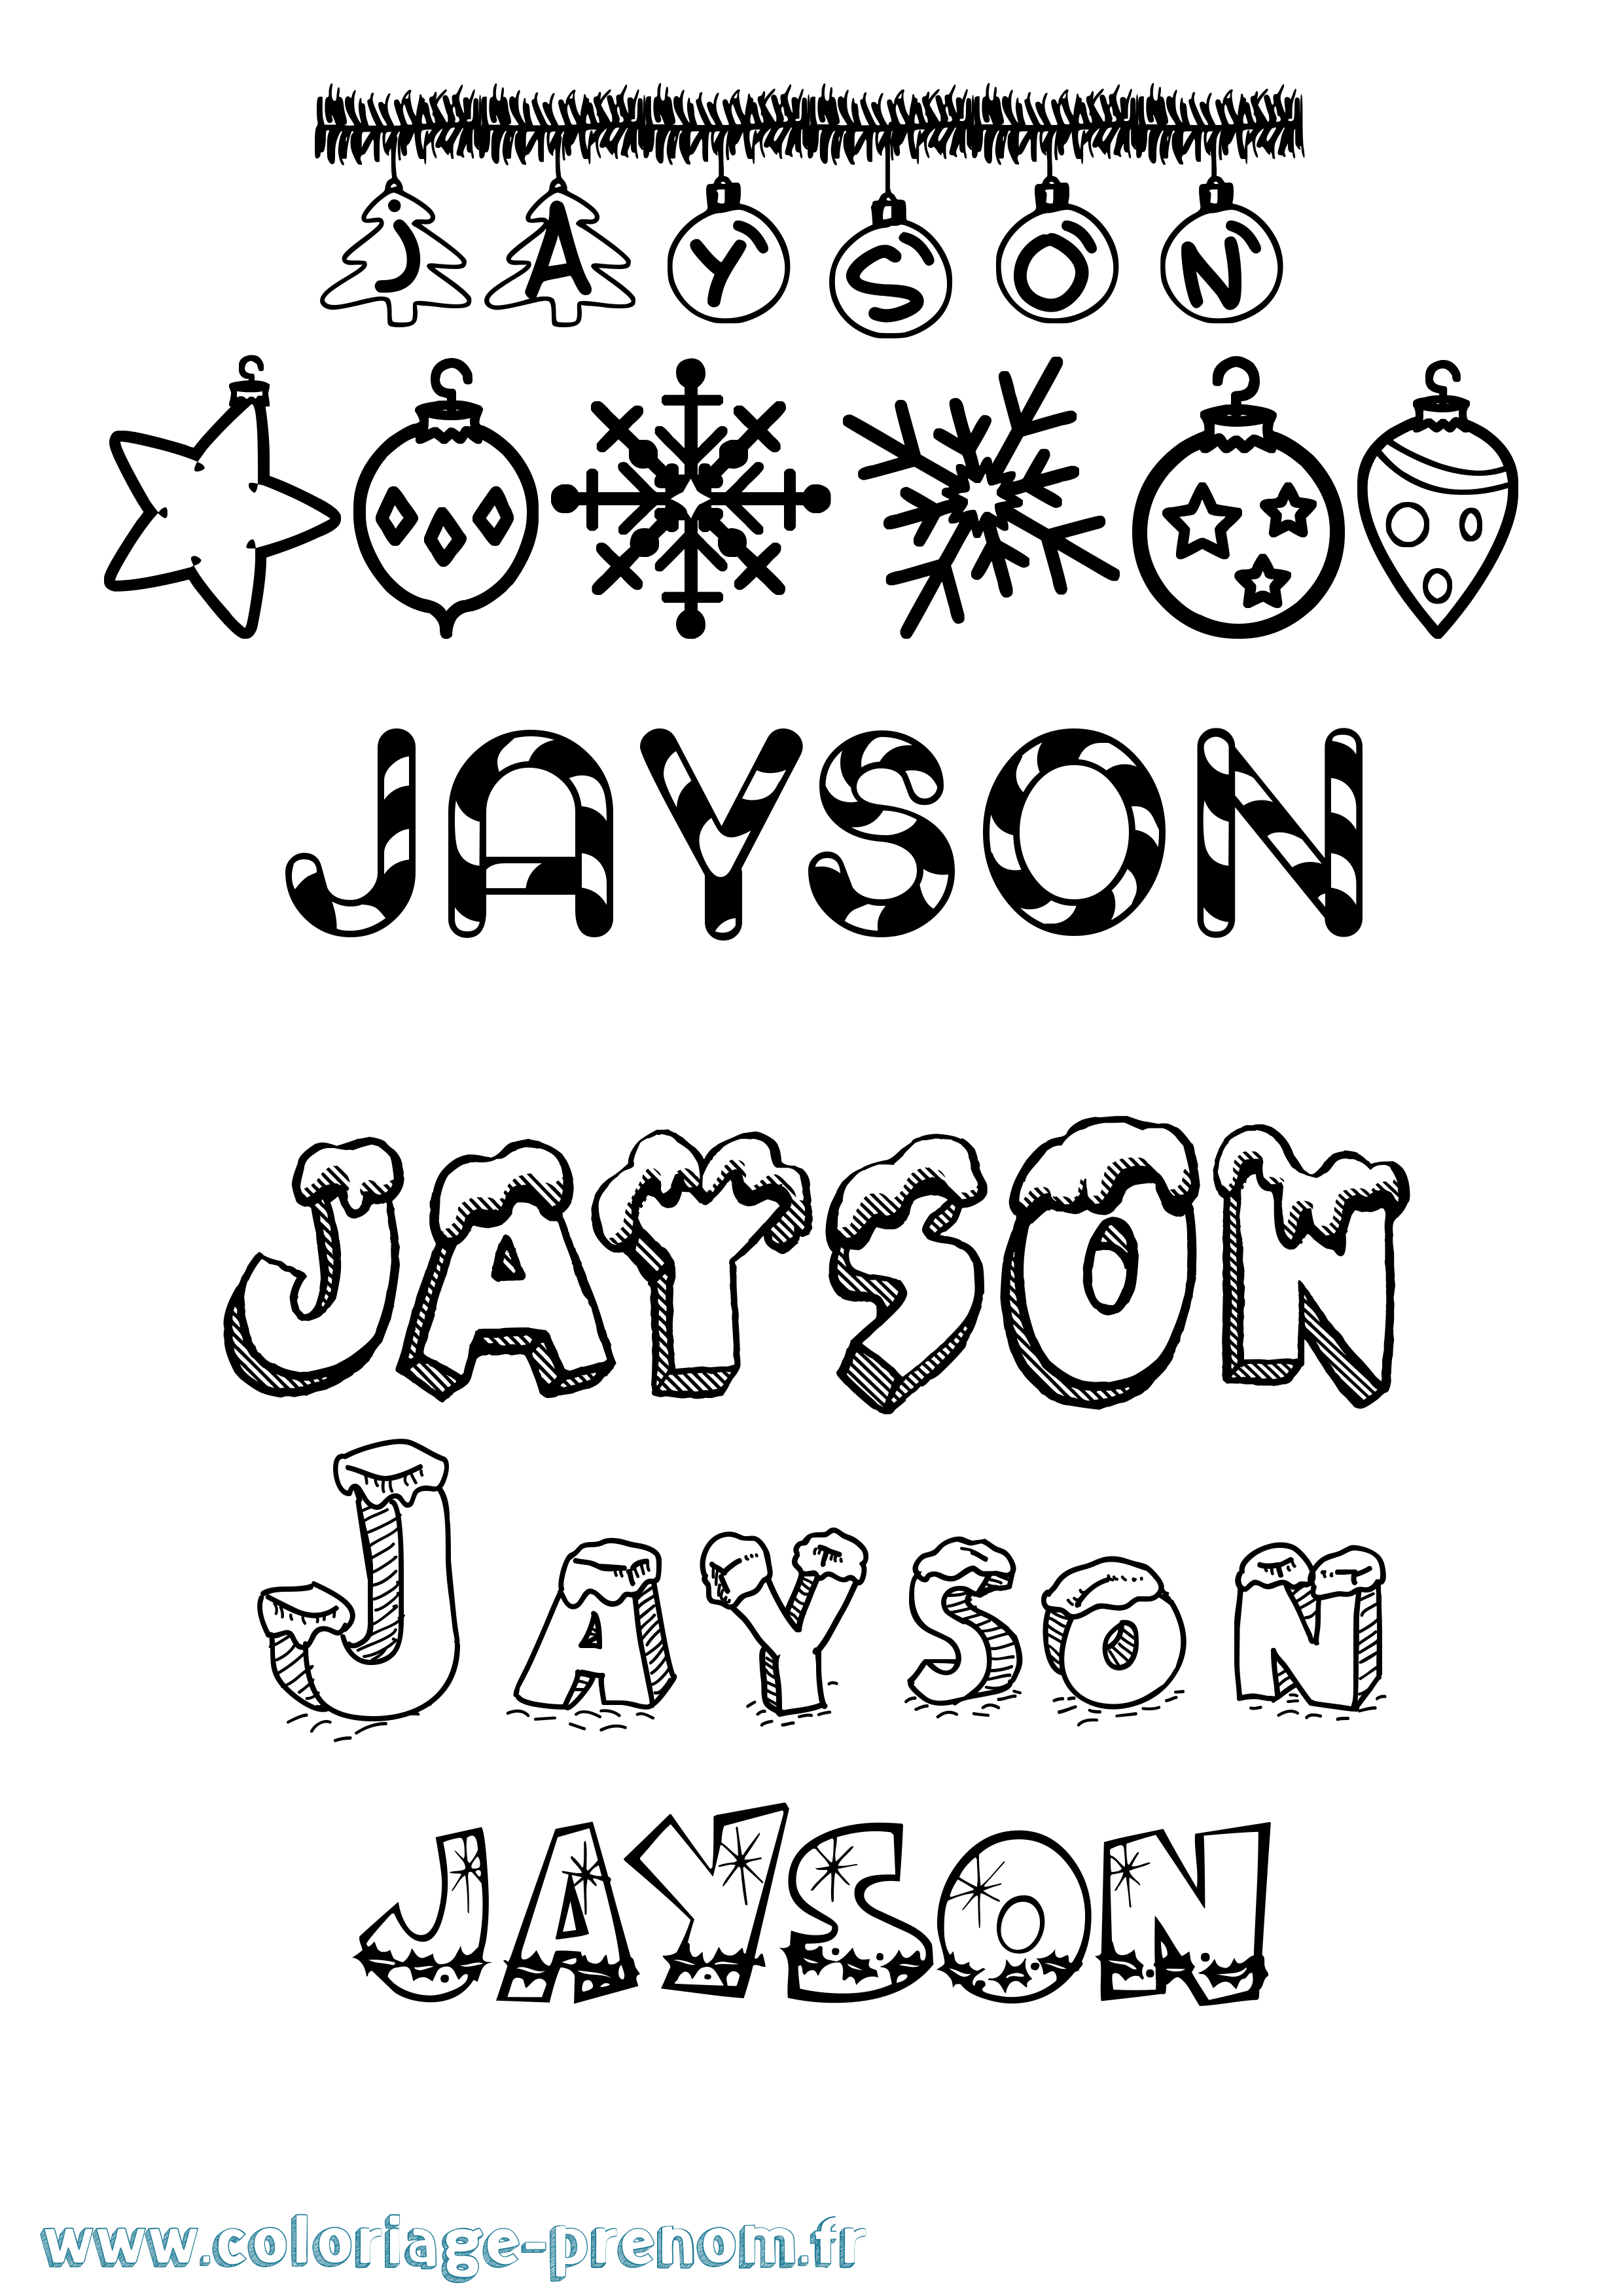 Coloriage prénom Jayson